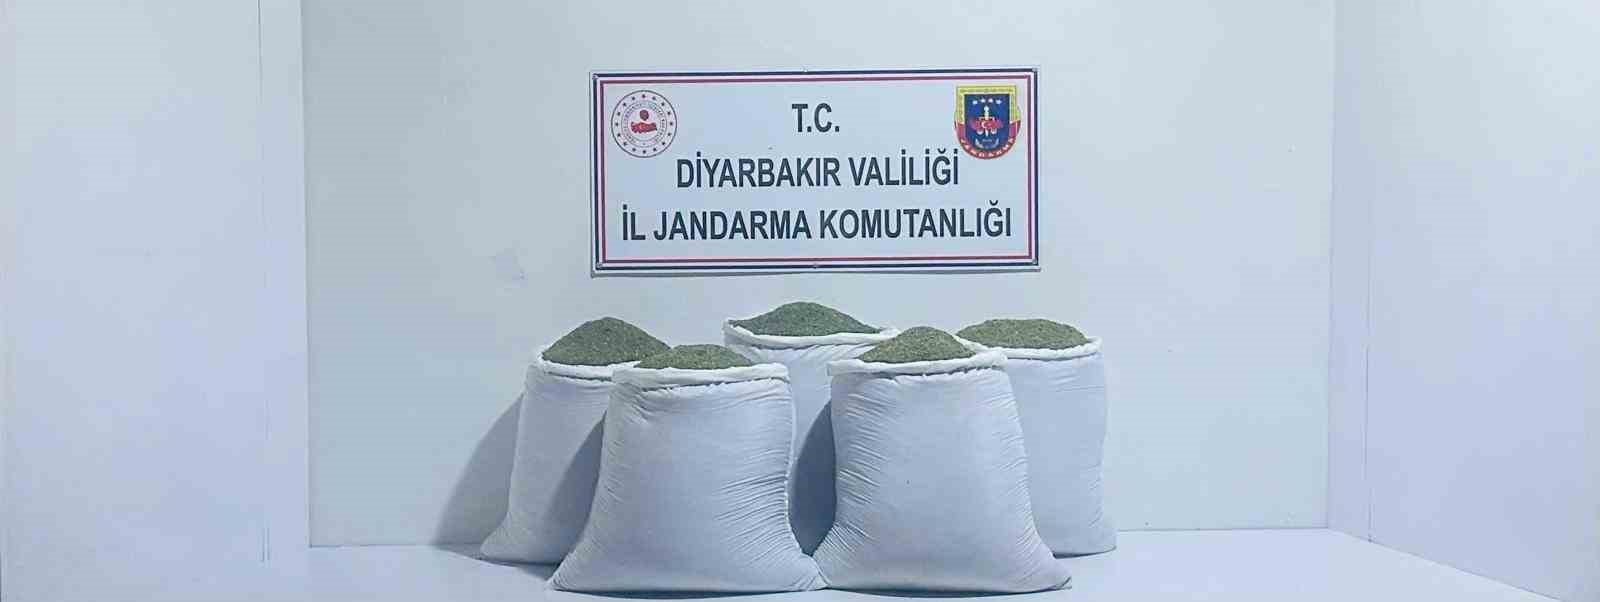 Diyarbakır’da 230 kilo toz esrar ele geçirildi